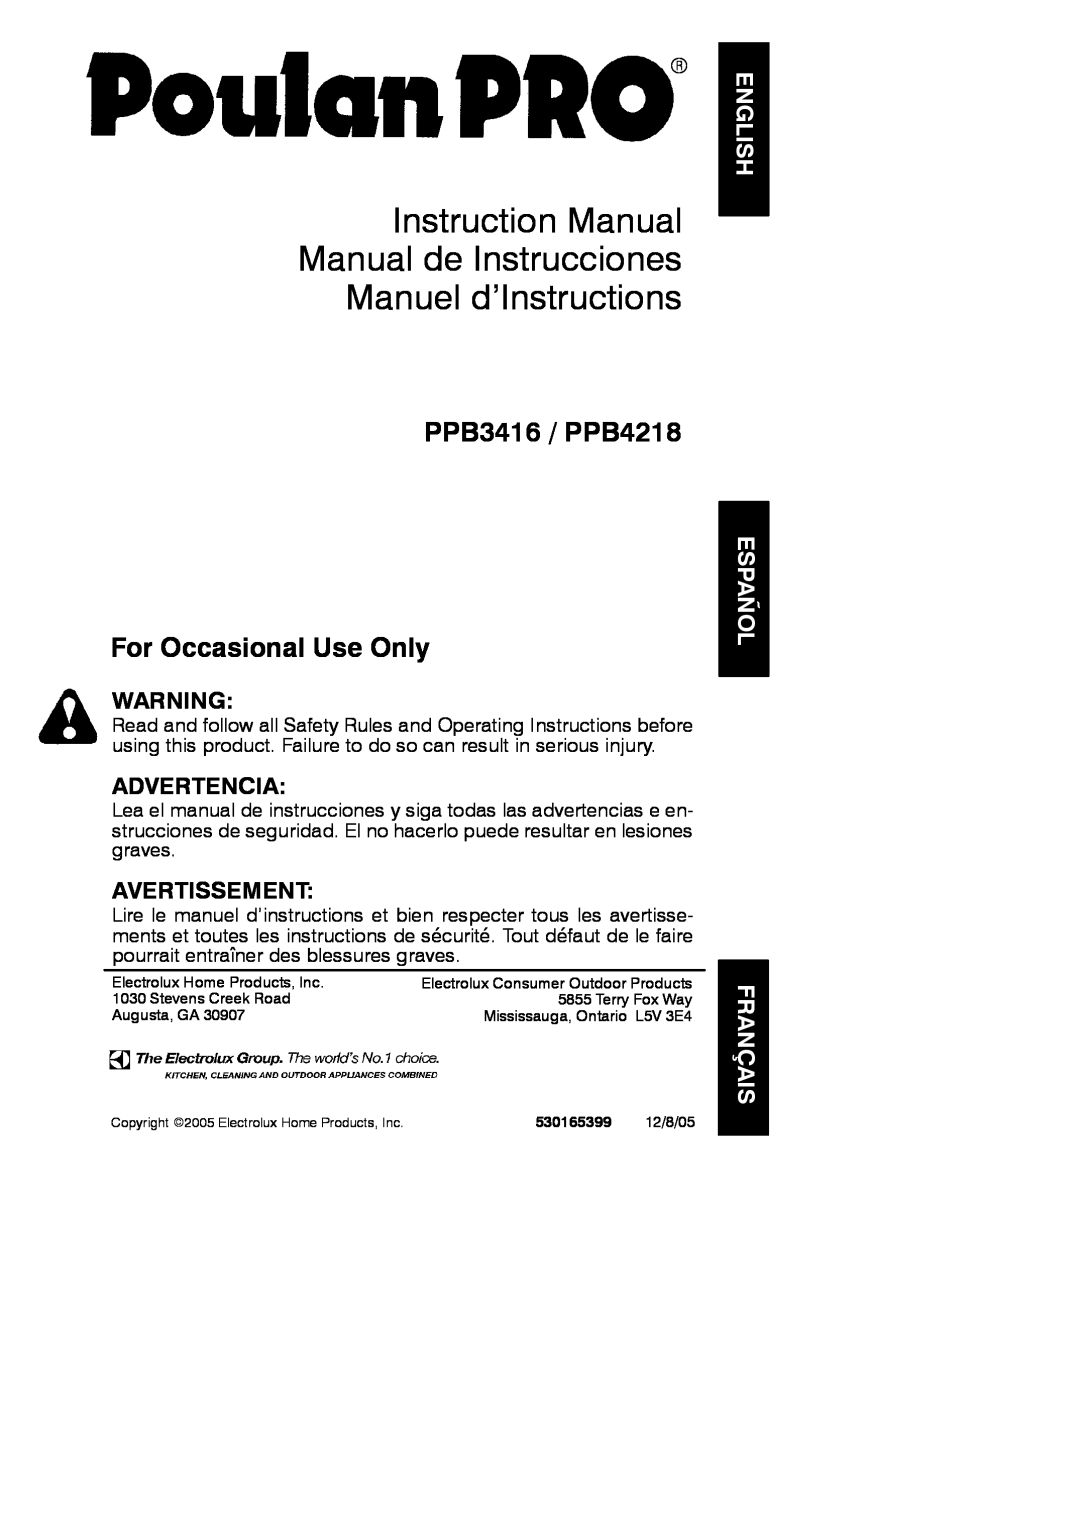 Poulan 530165399 instruction manual English, Español Français, PPB3416 / PPB4218 For Occasional Use Only, Advertencia 